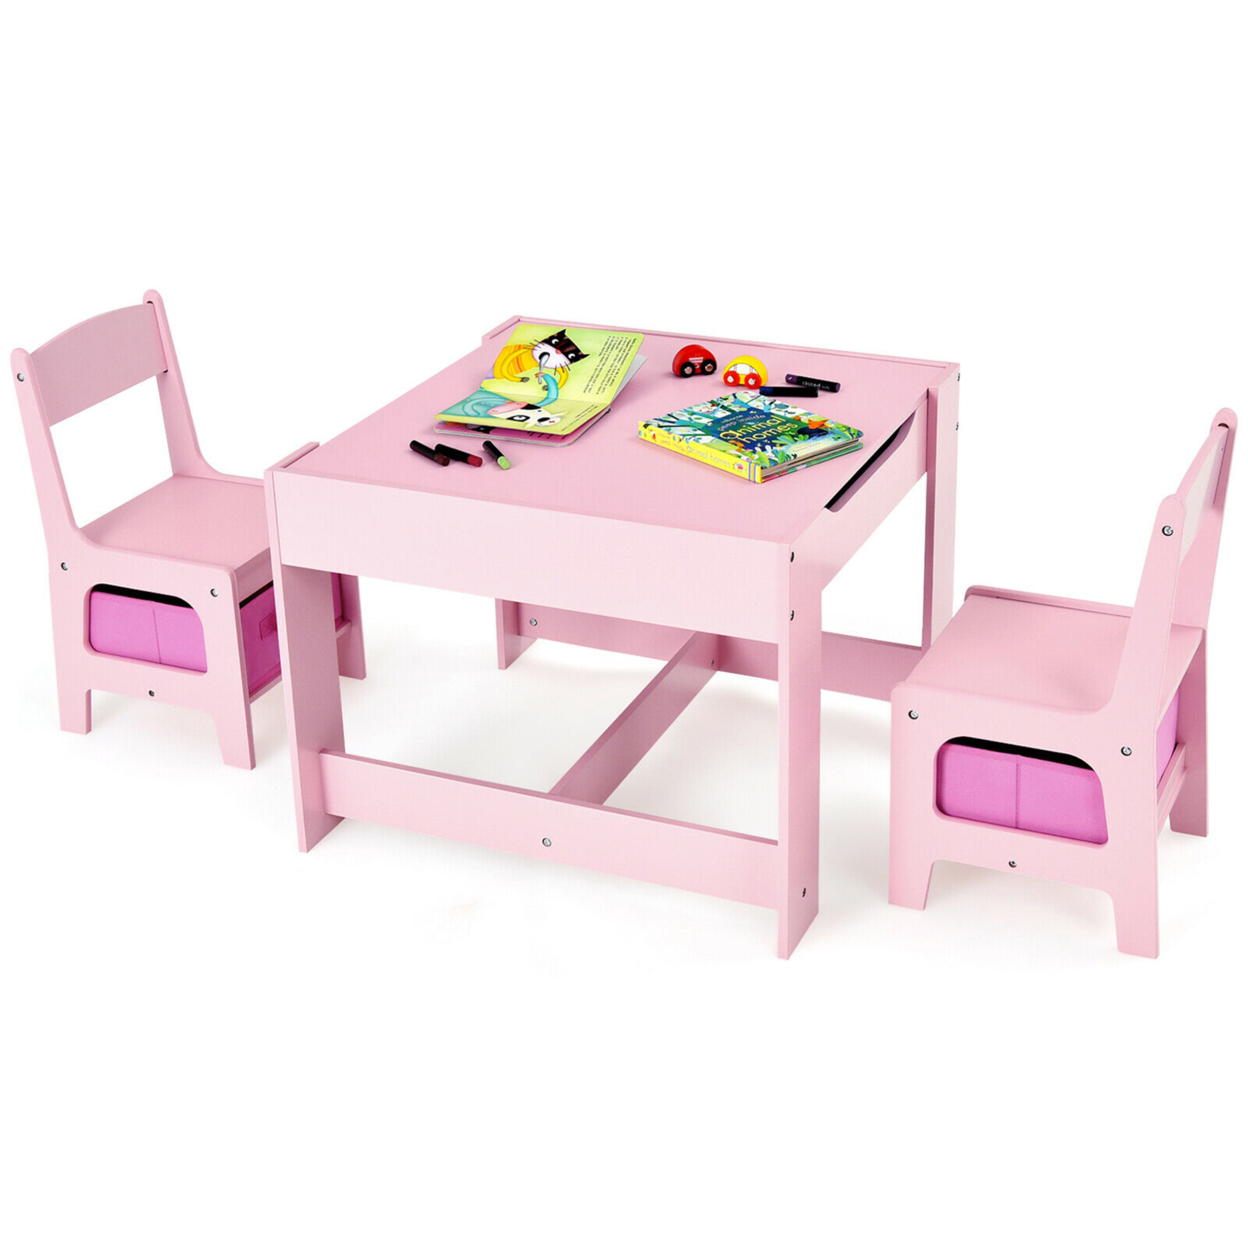 3 In 1 Kids Wood Table Chairs Set W/ Storage Box Blackboard Drawing Pink